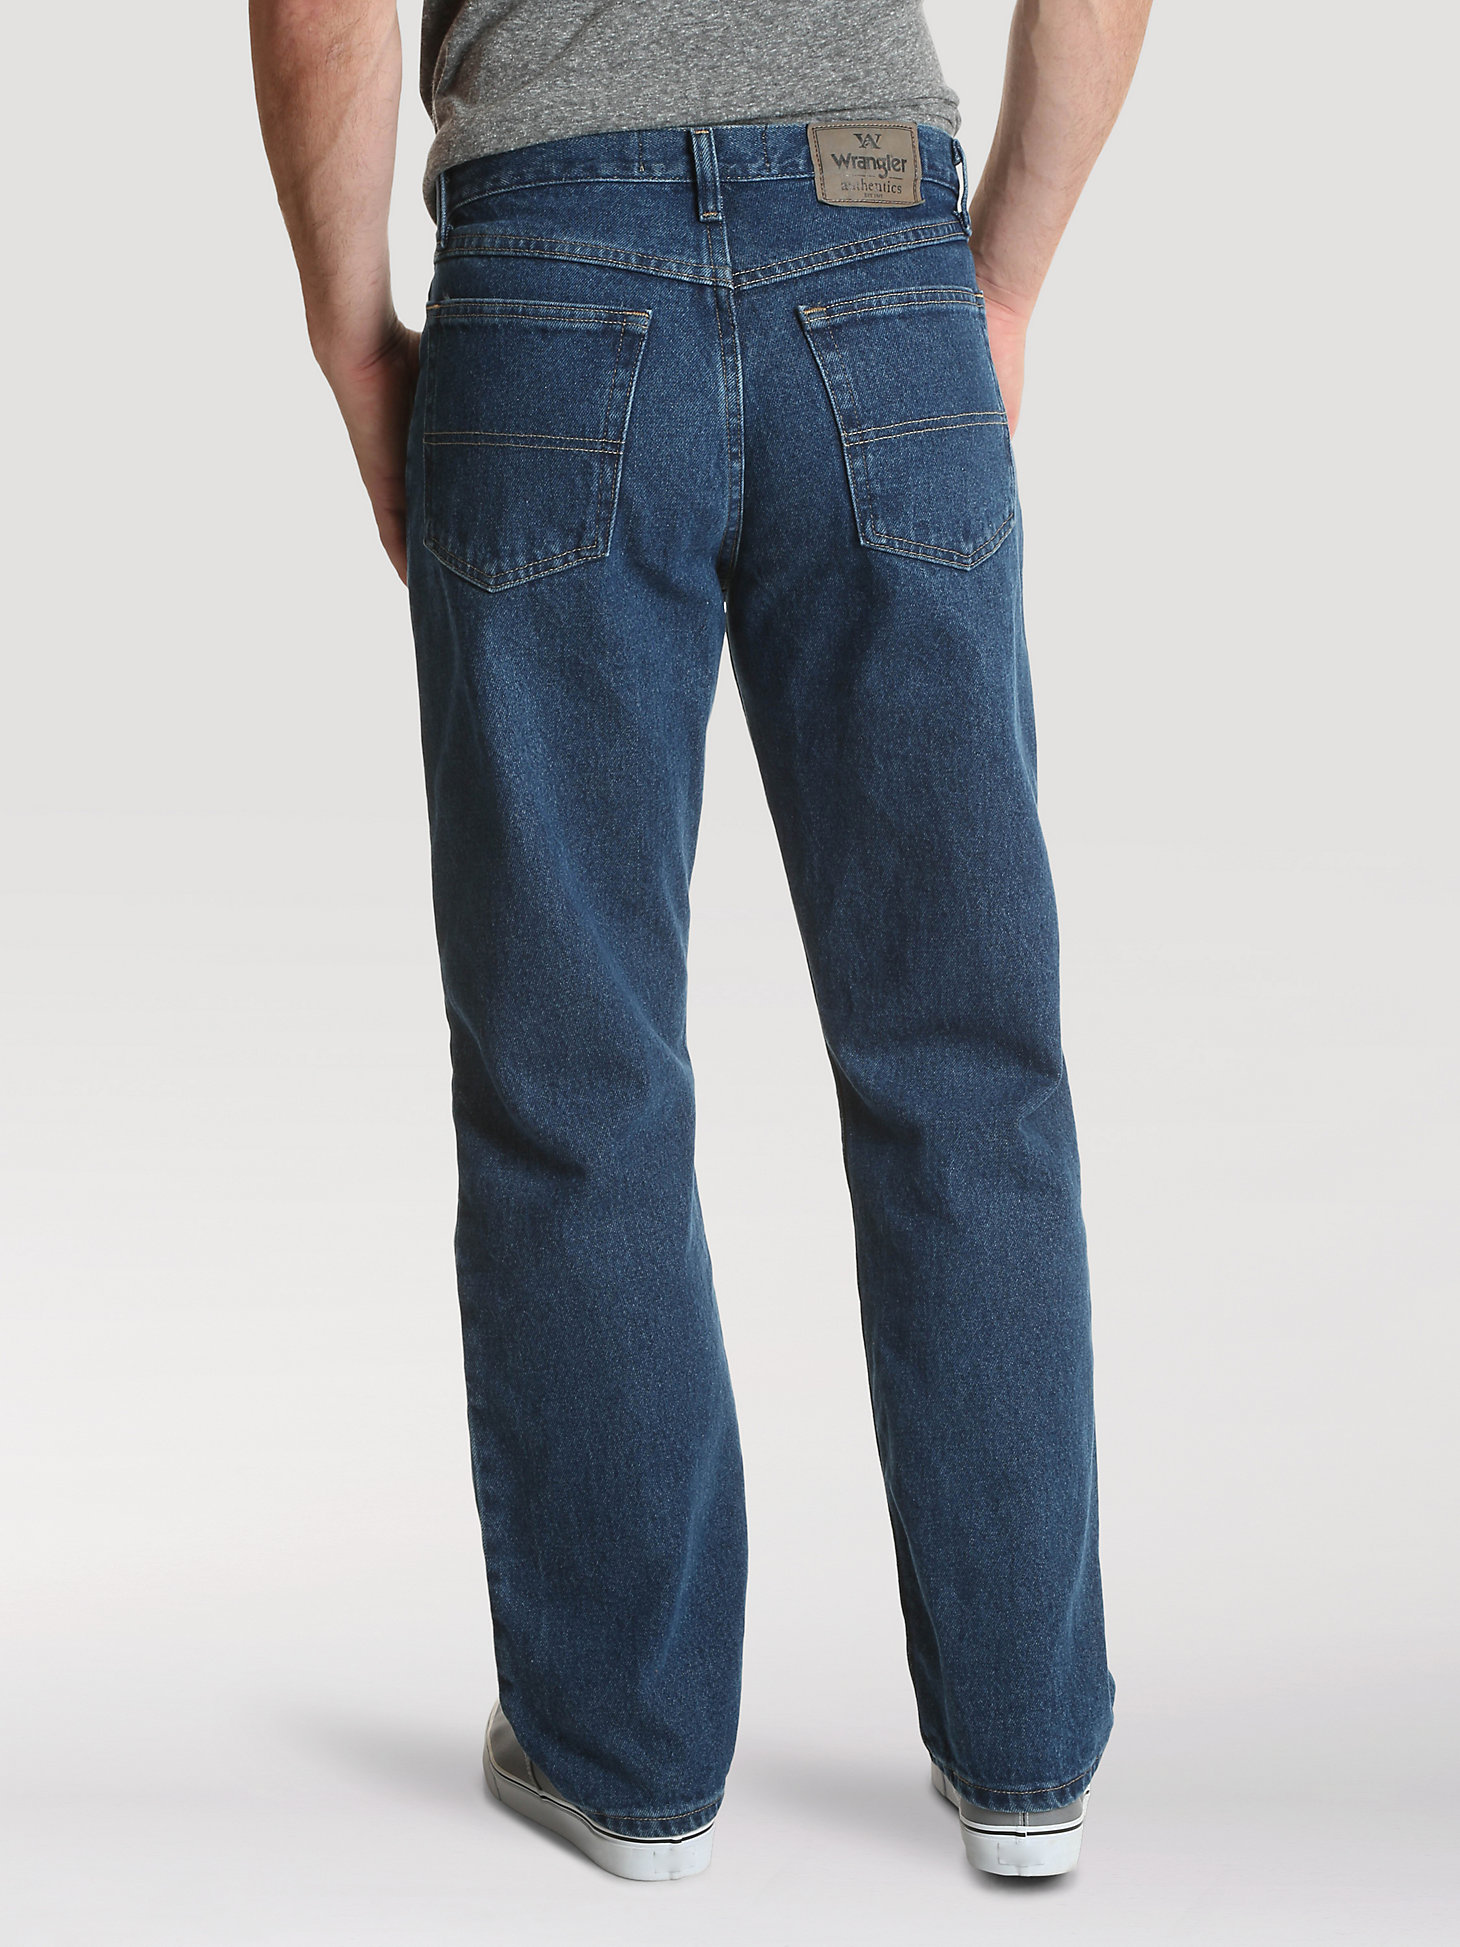 Men's Wrangler Authentics® Relaxed Fit Cotton Jean in Dark Stonewash alternative view 1